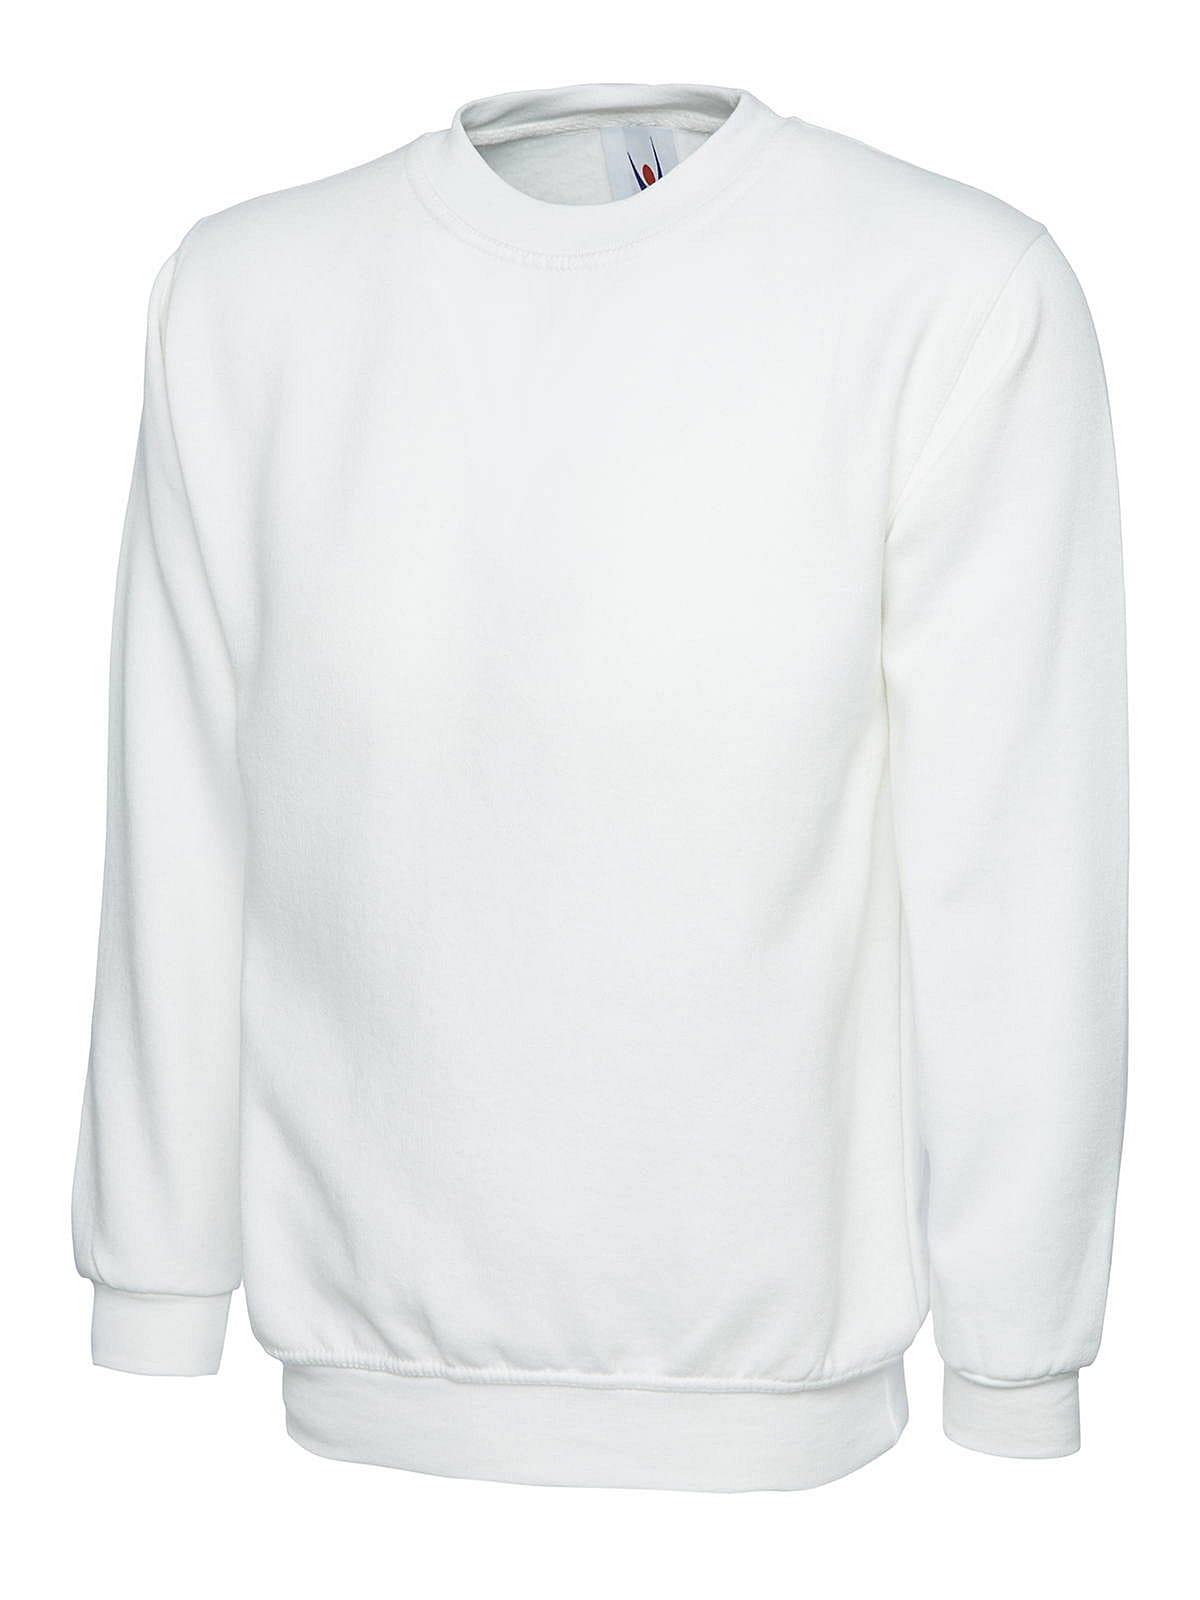 Uneek 300GSM Classic Sweatshirt in White (Product Code: UC203)